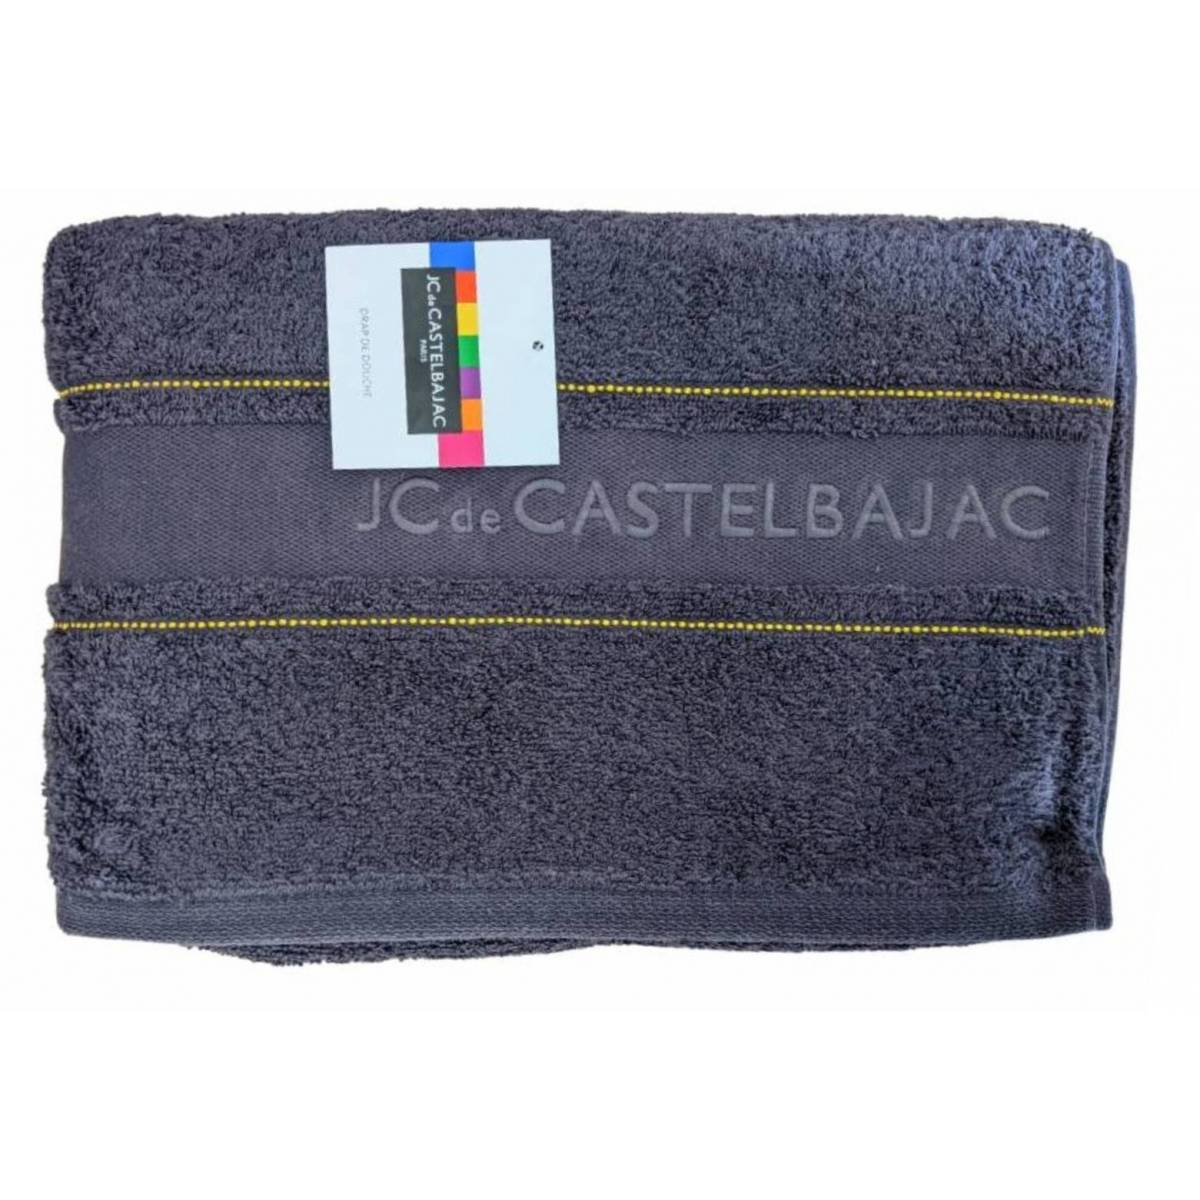 Castelbajac - Shower sheet 70 x 140 cm Dark gray